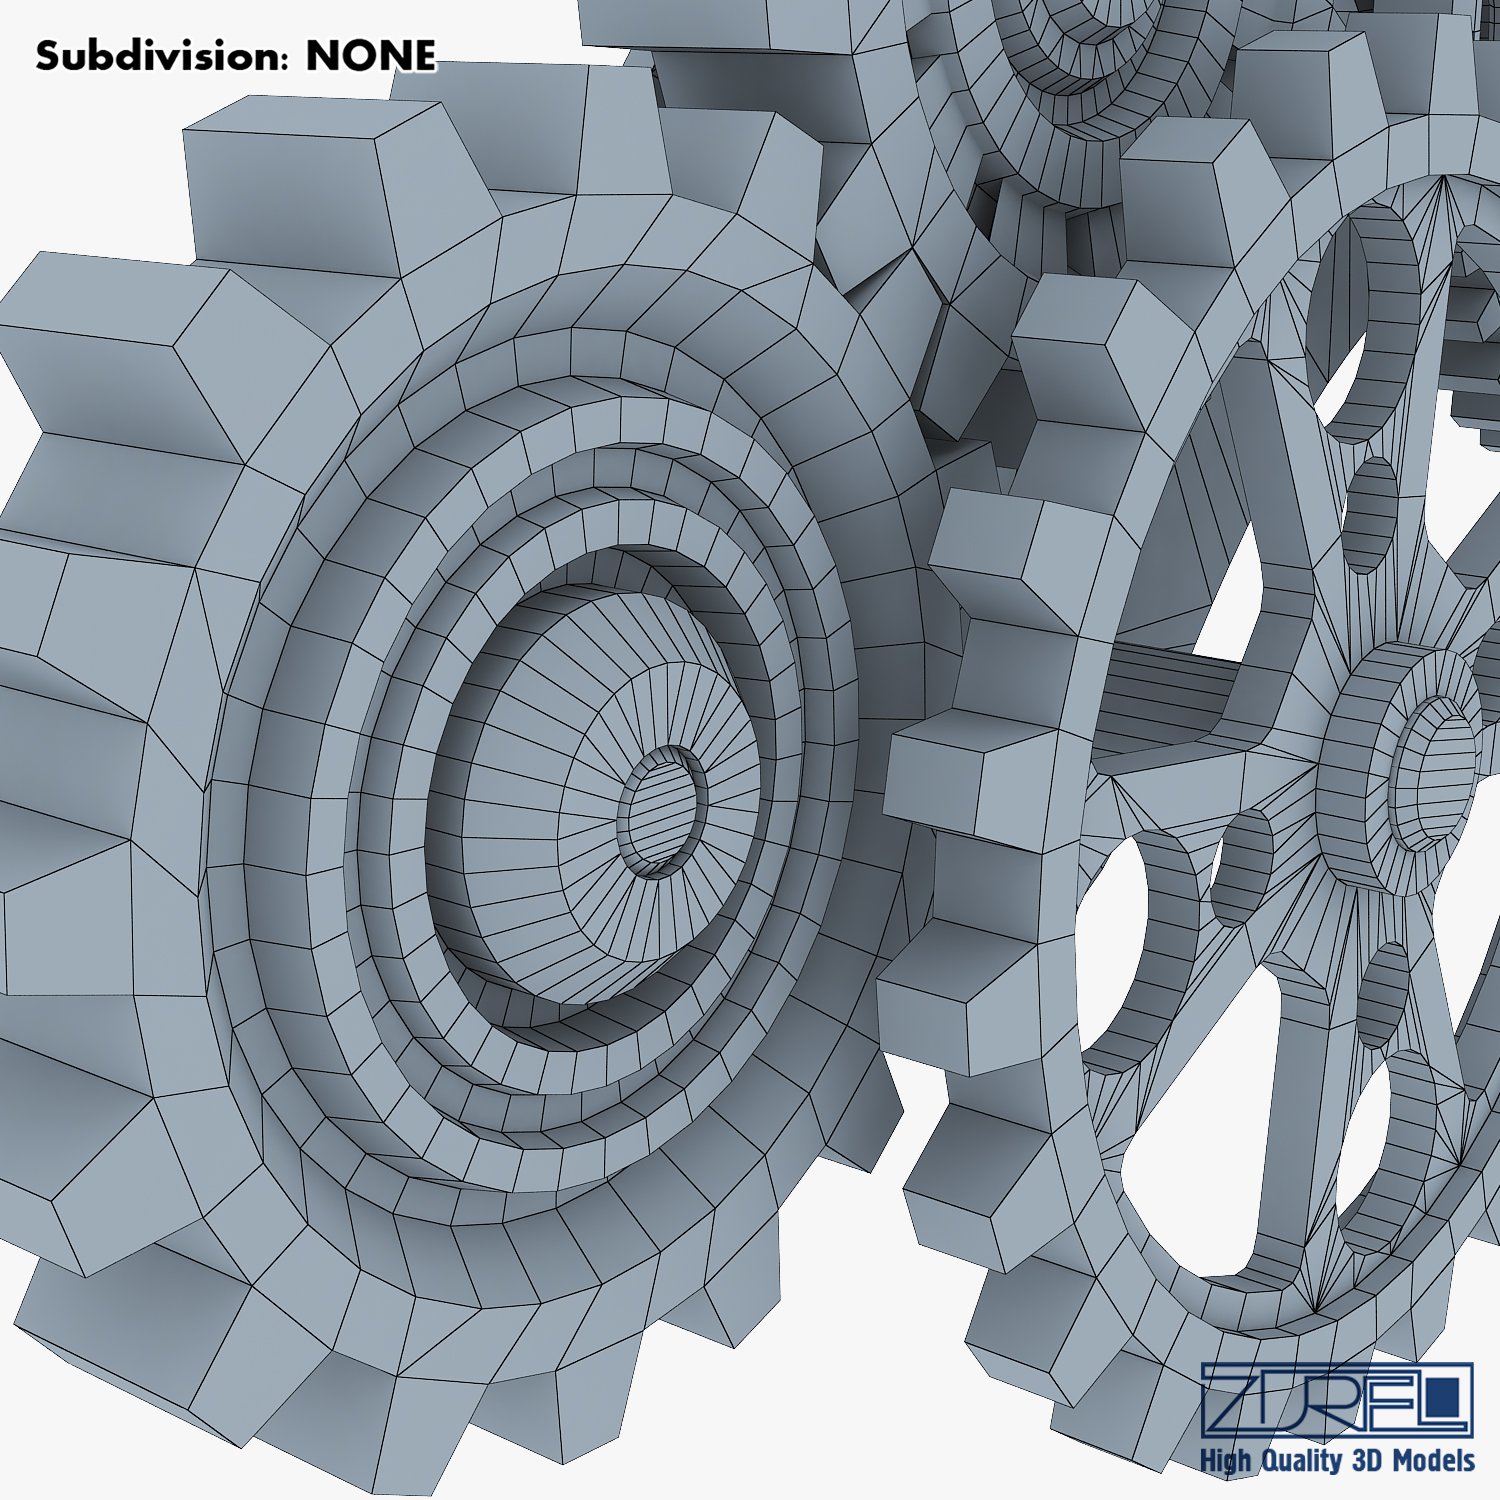 Gear Mechanism V 2 - 3D Model by Zurel